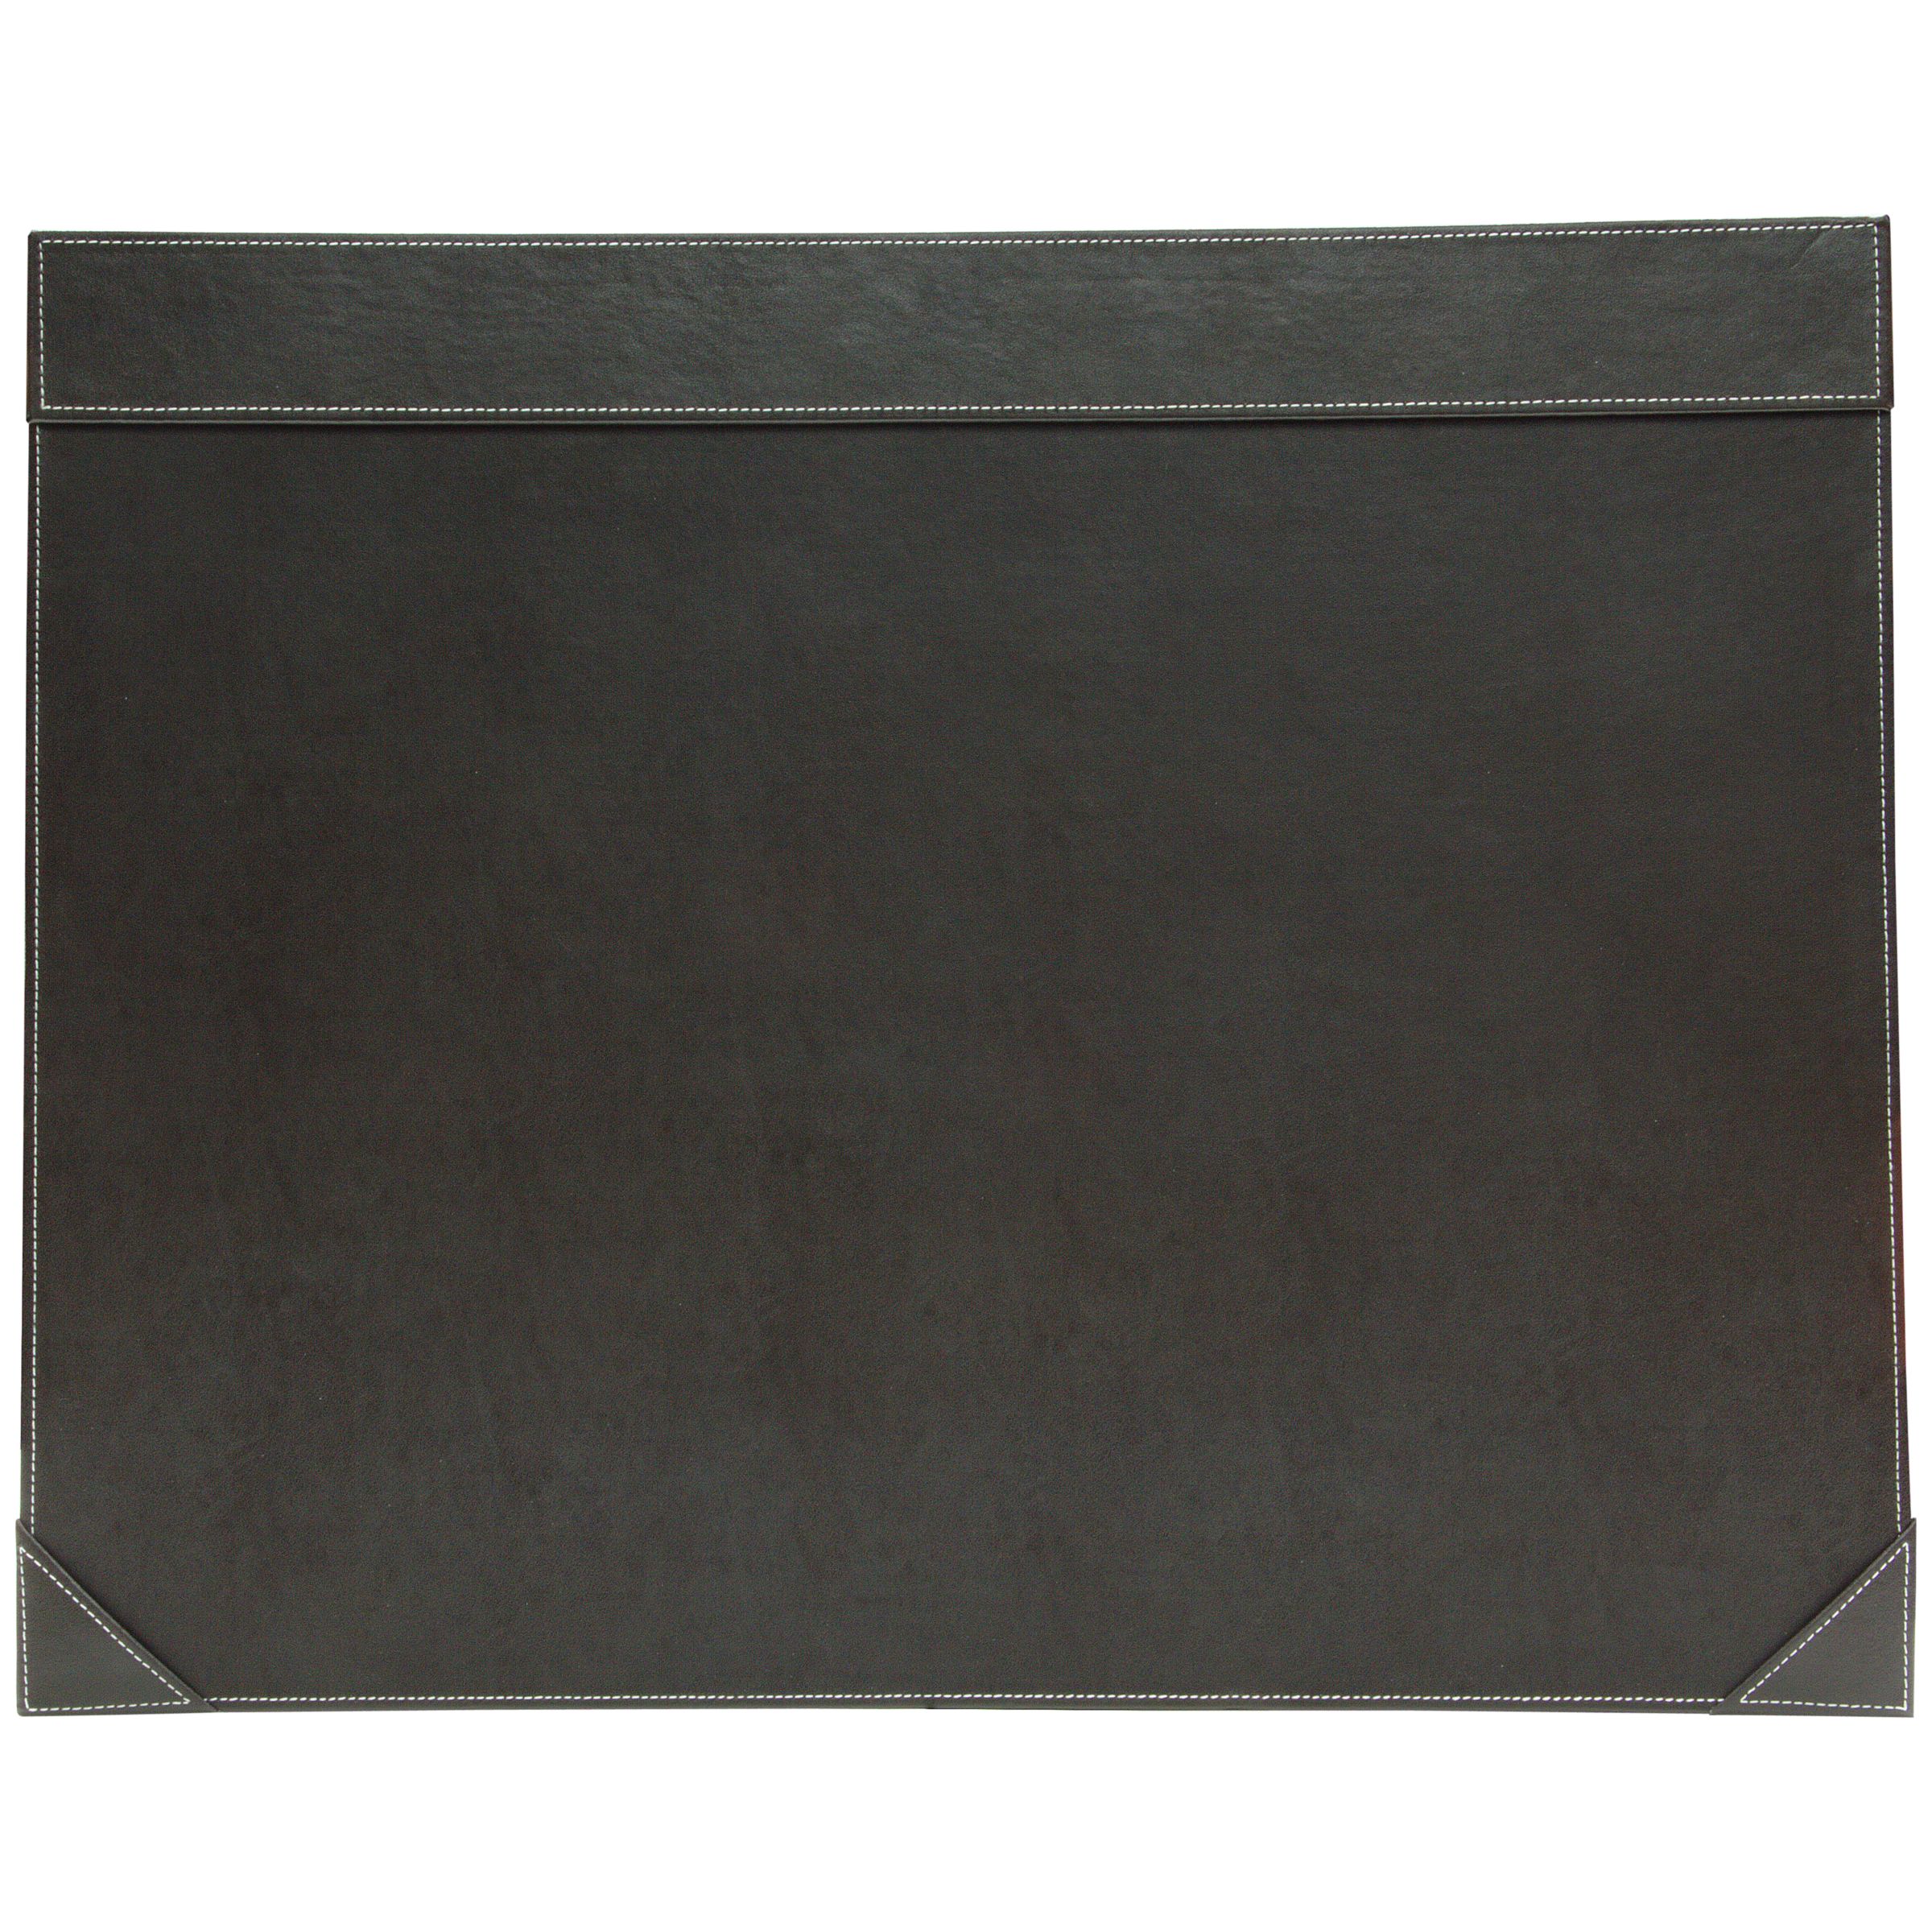 Buy Osco Full Demy Faux Leather Desk Mat, Brown | John Lewis